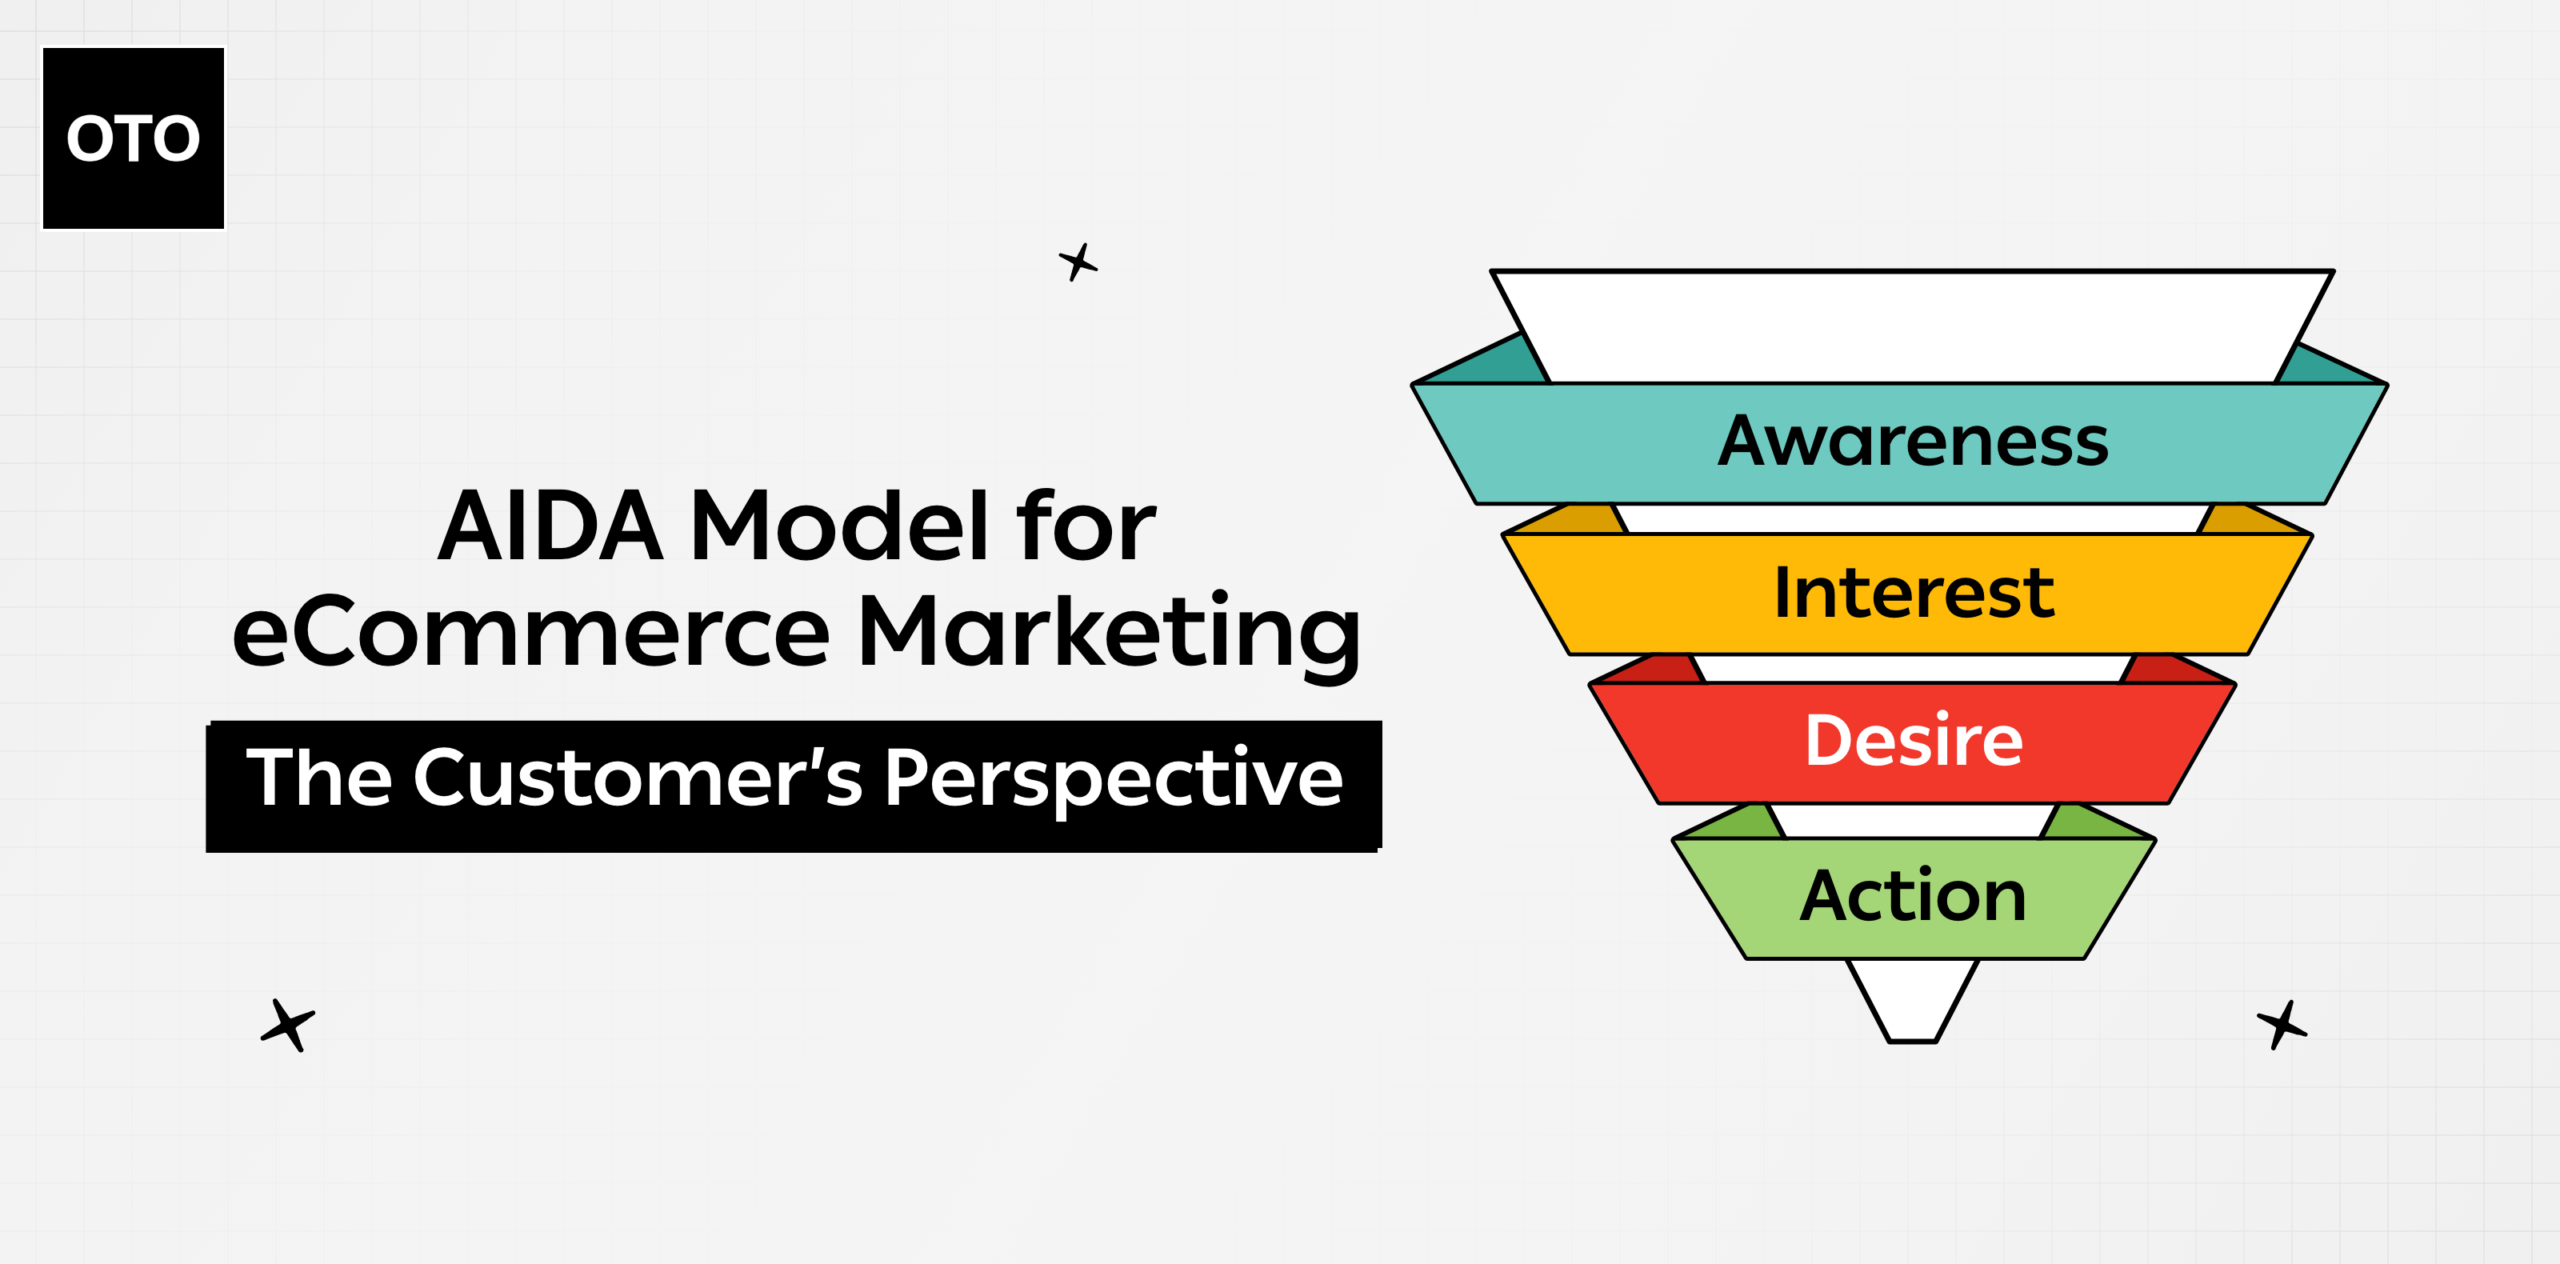 AIDA Model for eCommerce Marketing